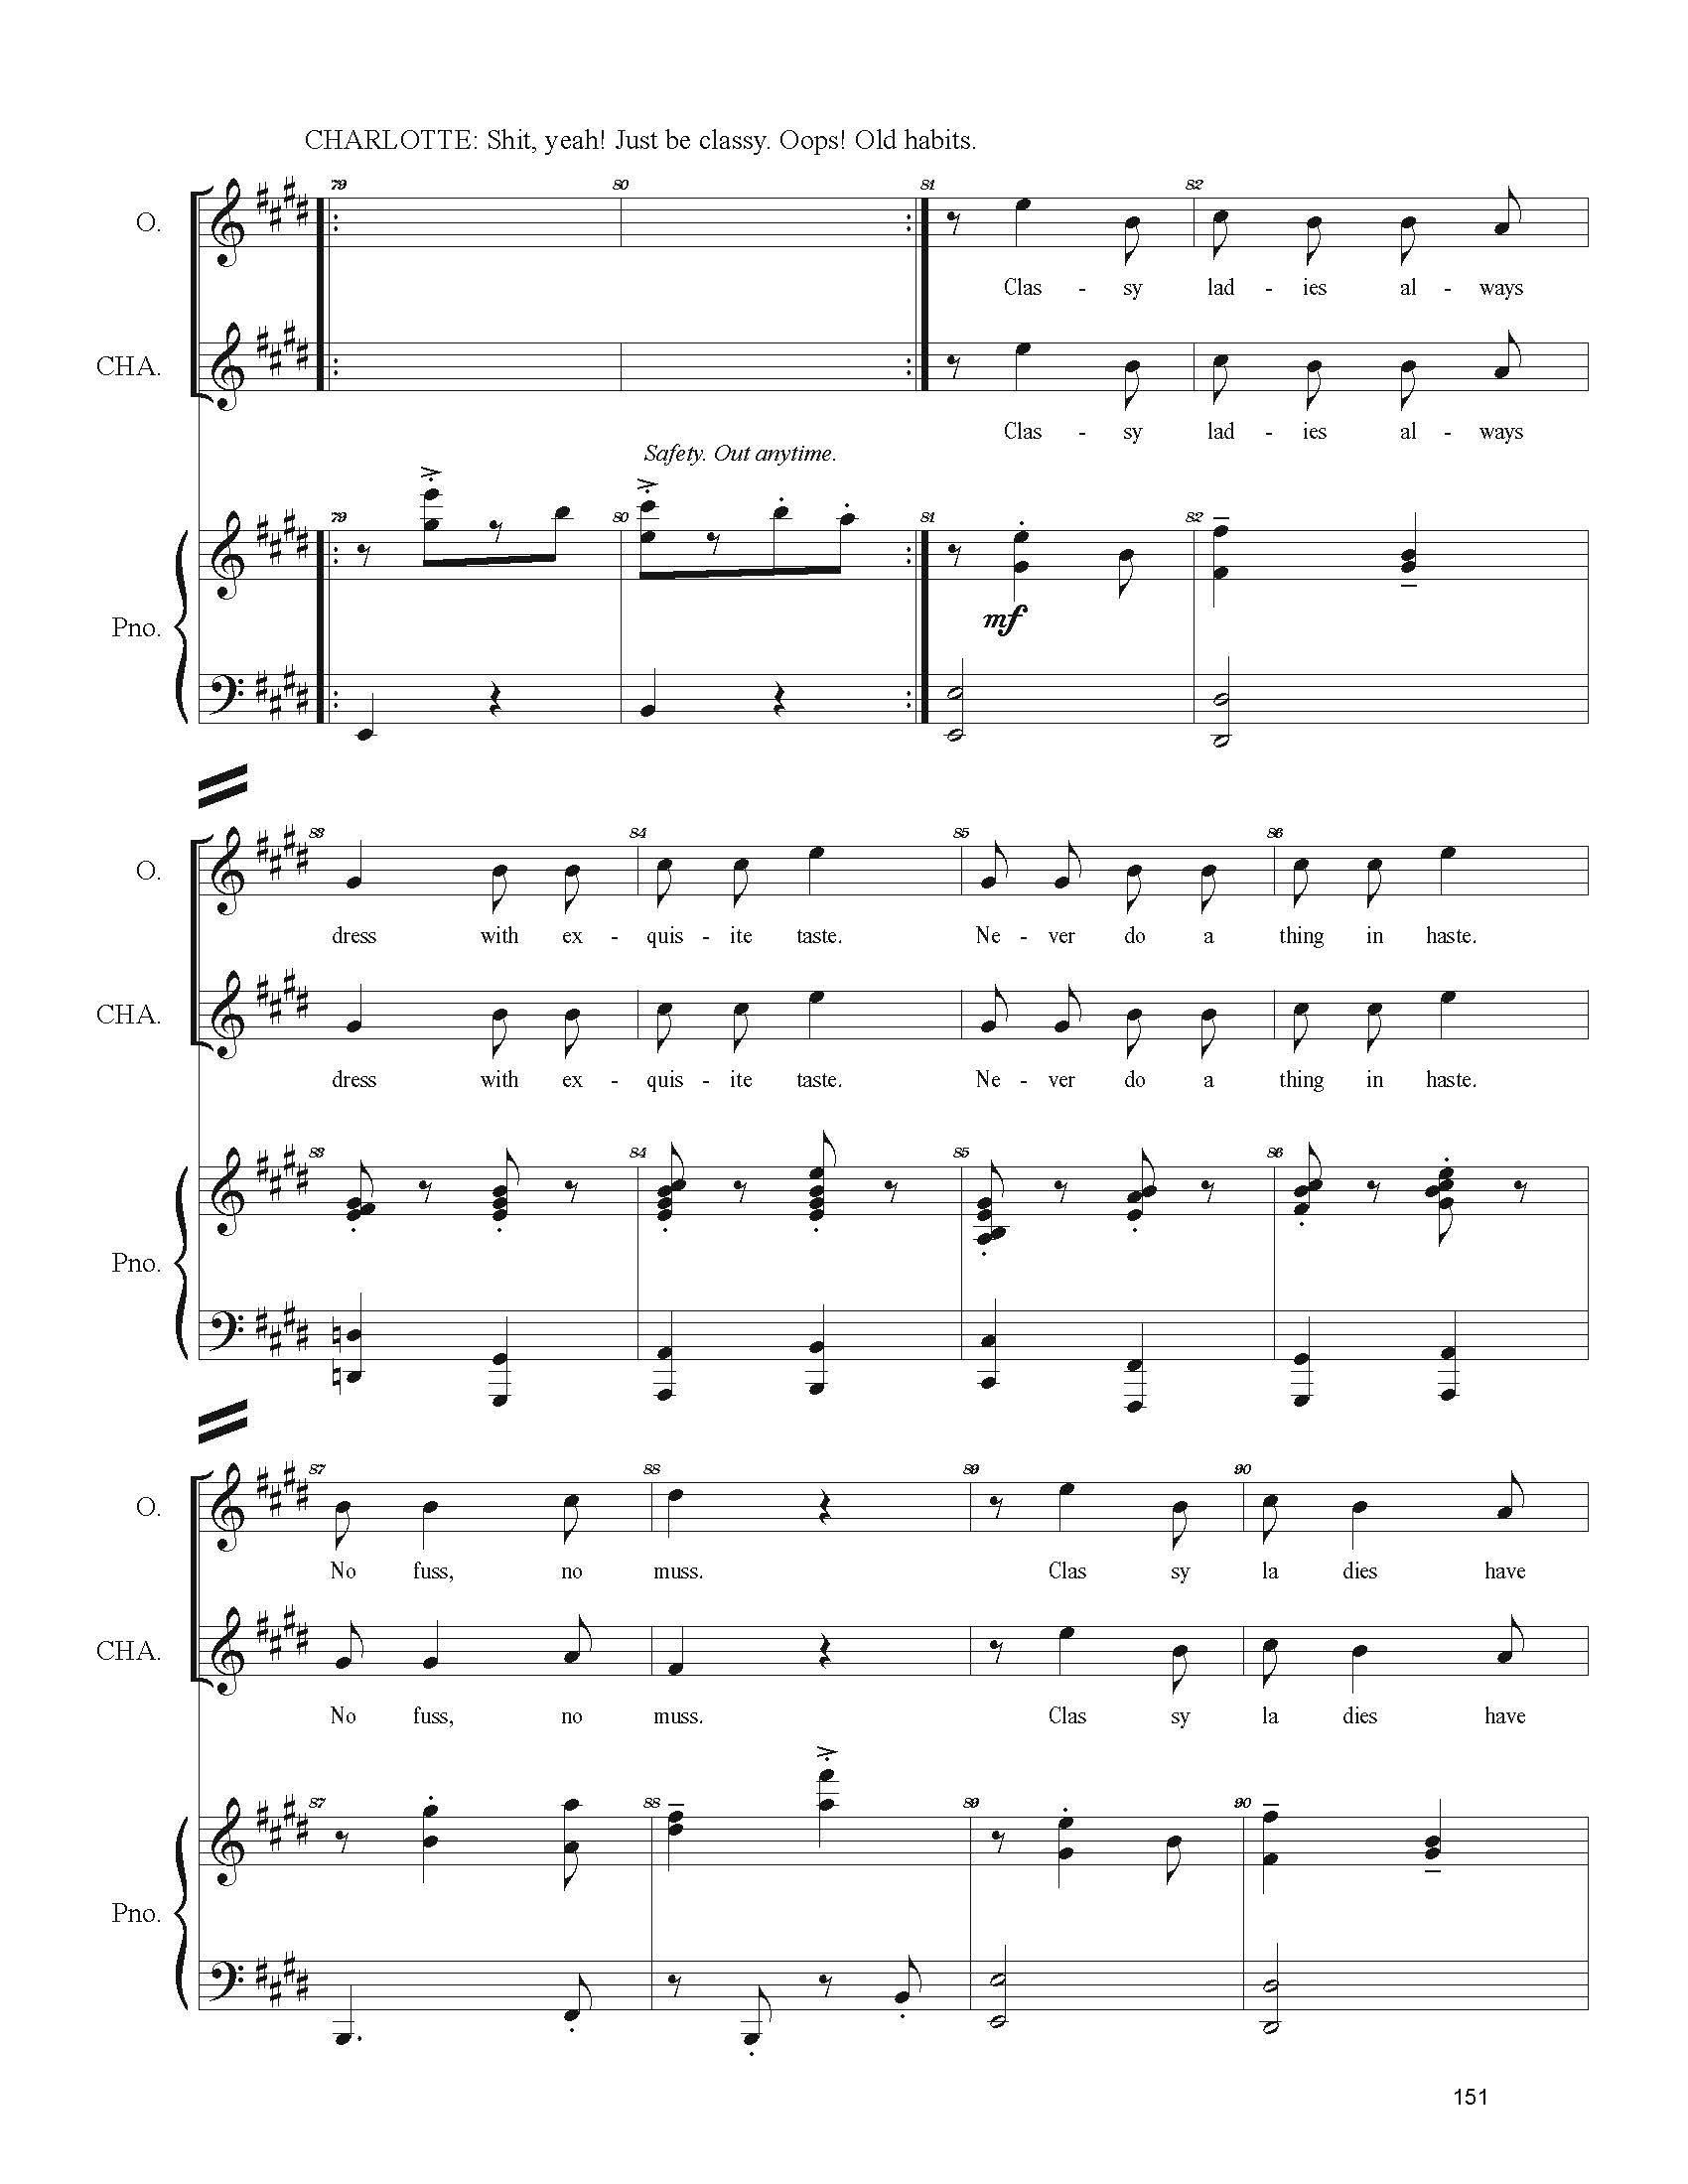 FULL PIANO VOCAL SCORE DRAFT 1 - Score_Page_151.jpg